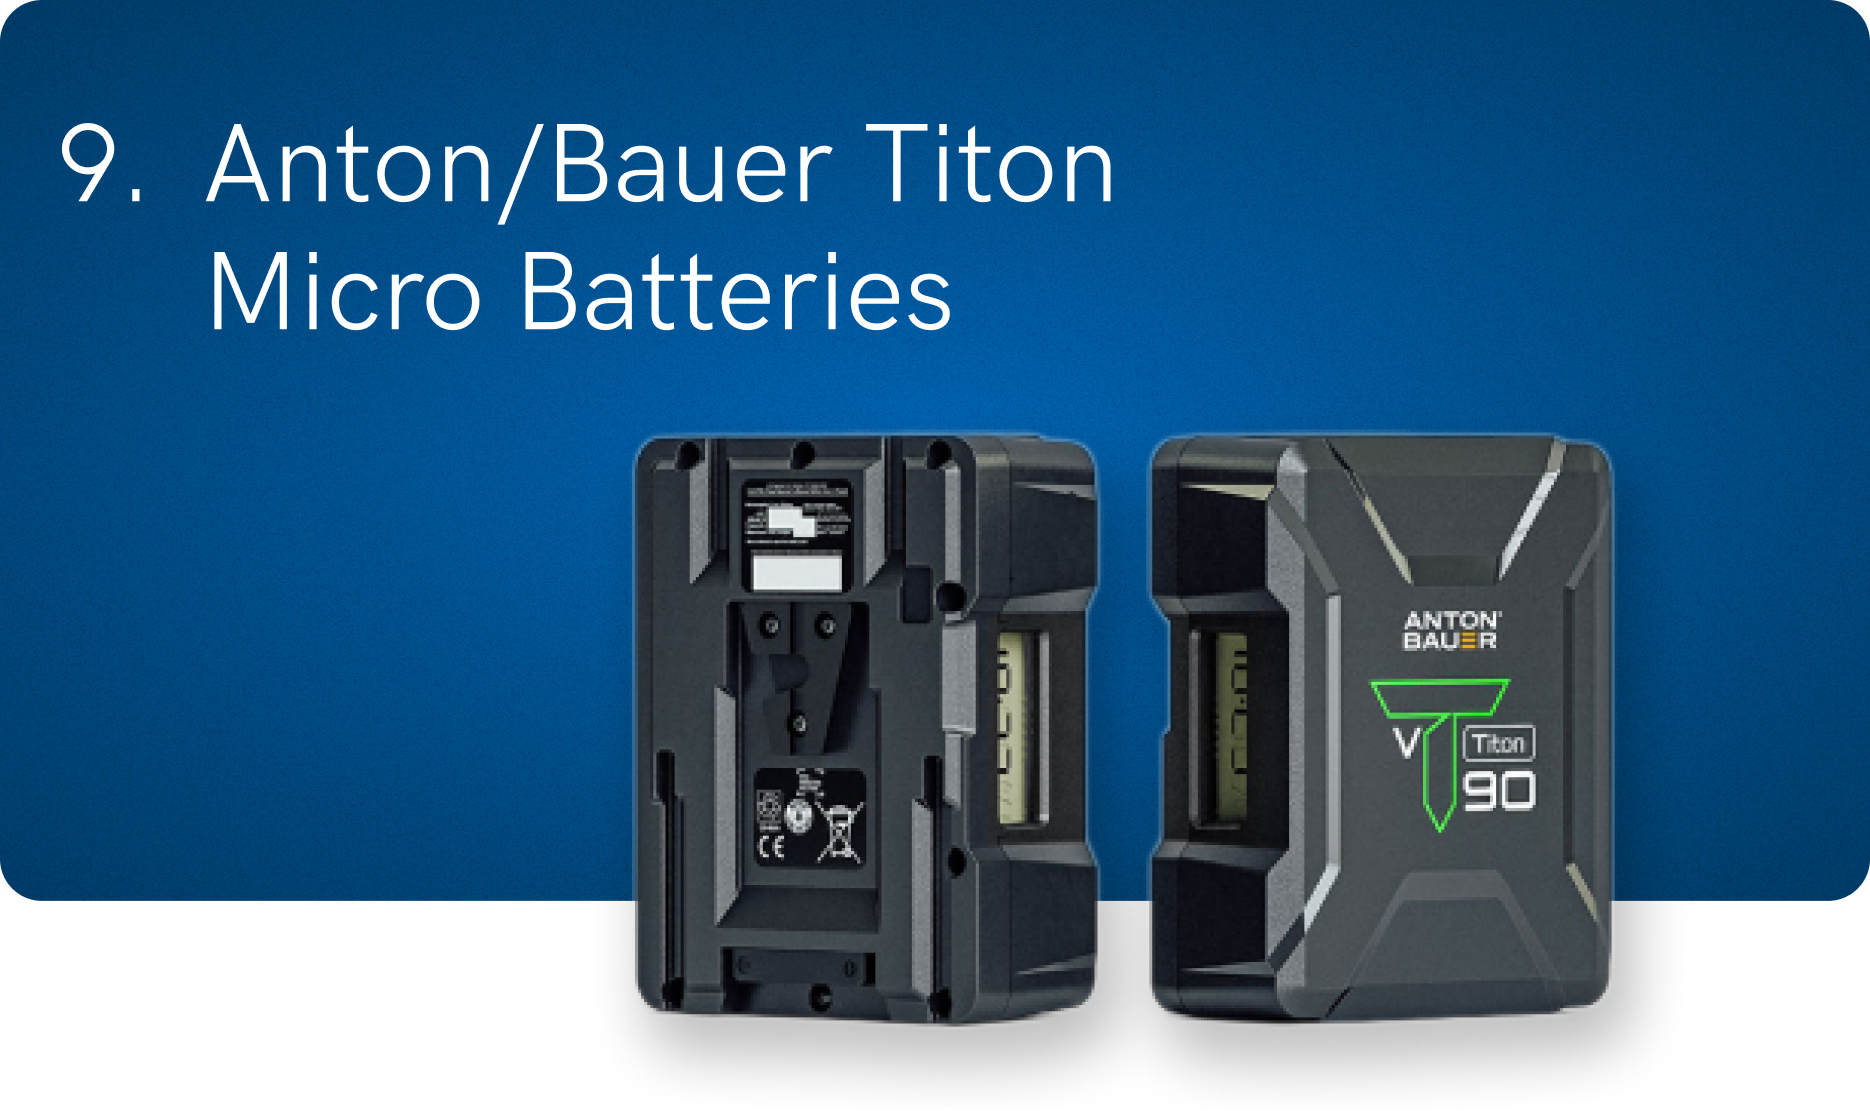 9. Anton/Bauer Titon Micro Batteries